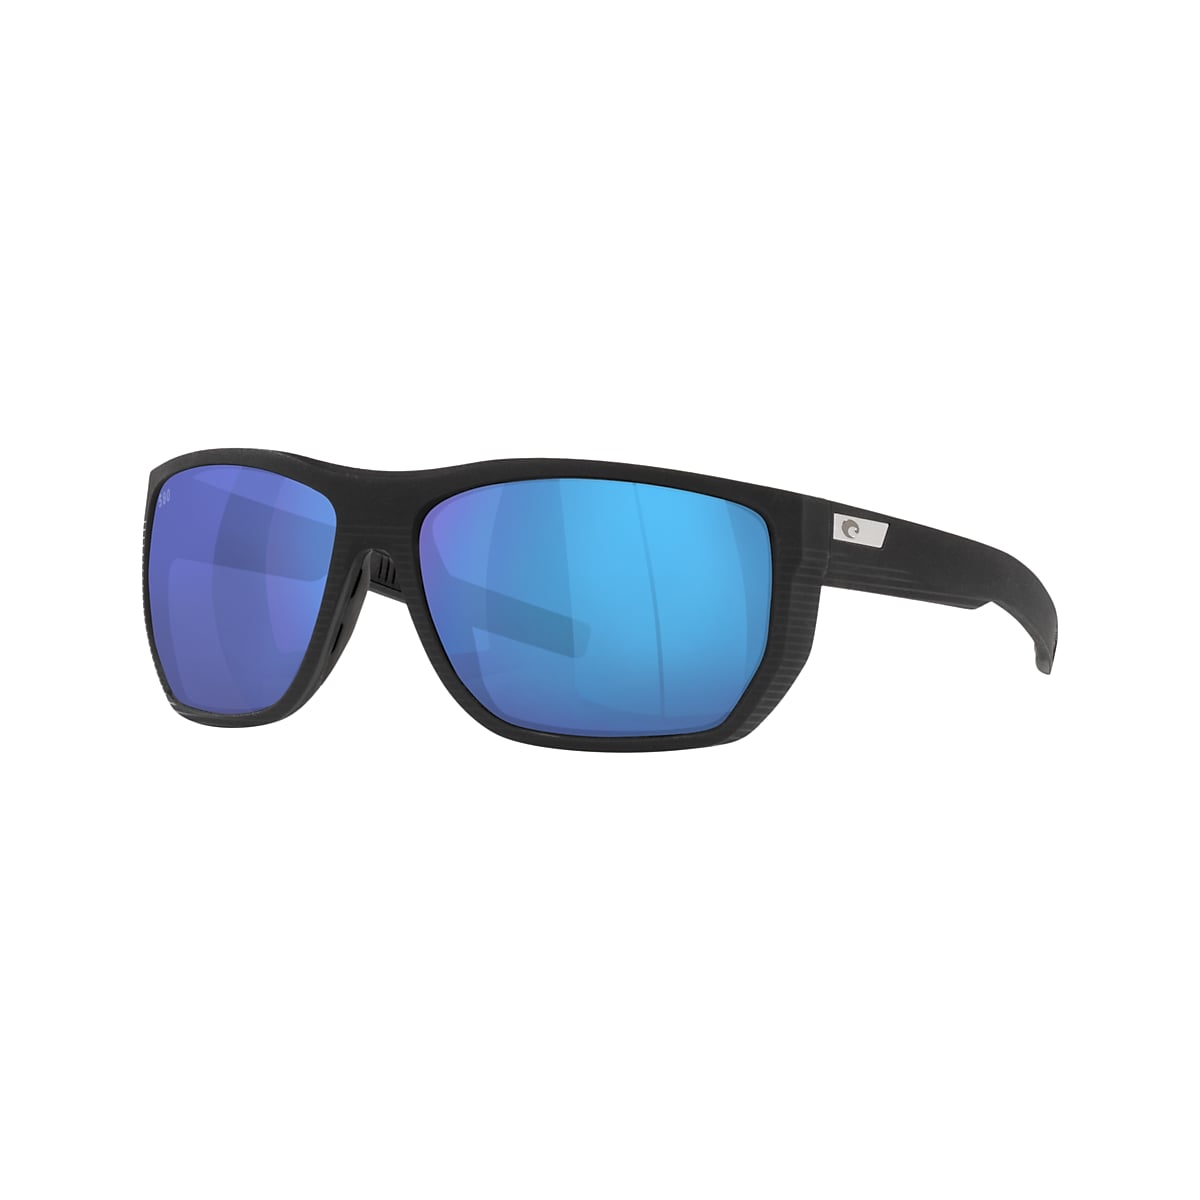 Santiago Polarized Sunglasses in Blue Mirror